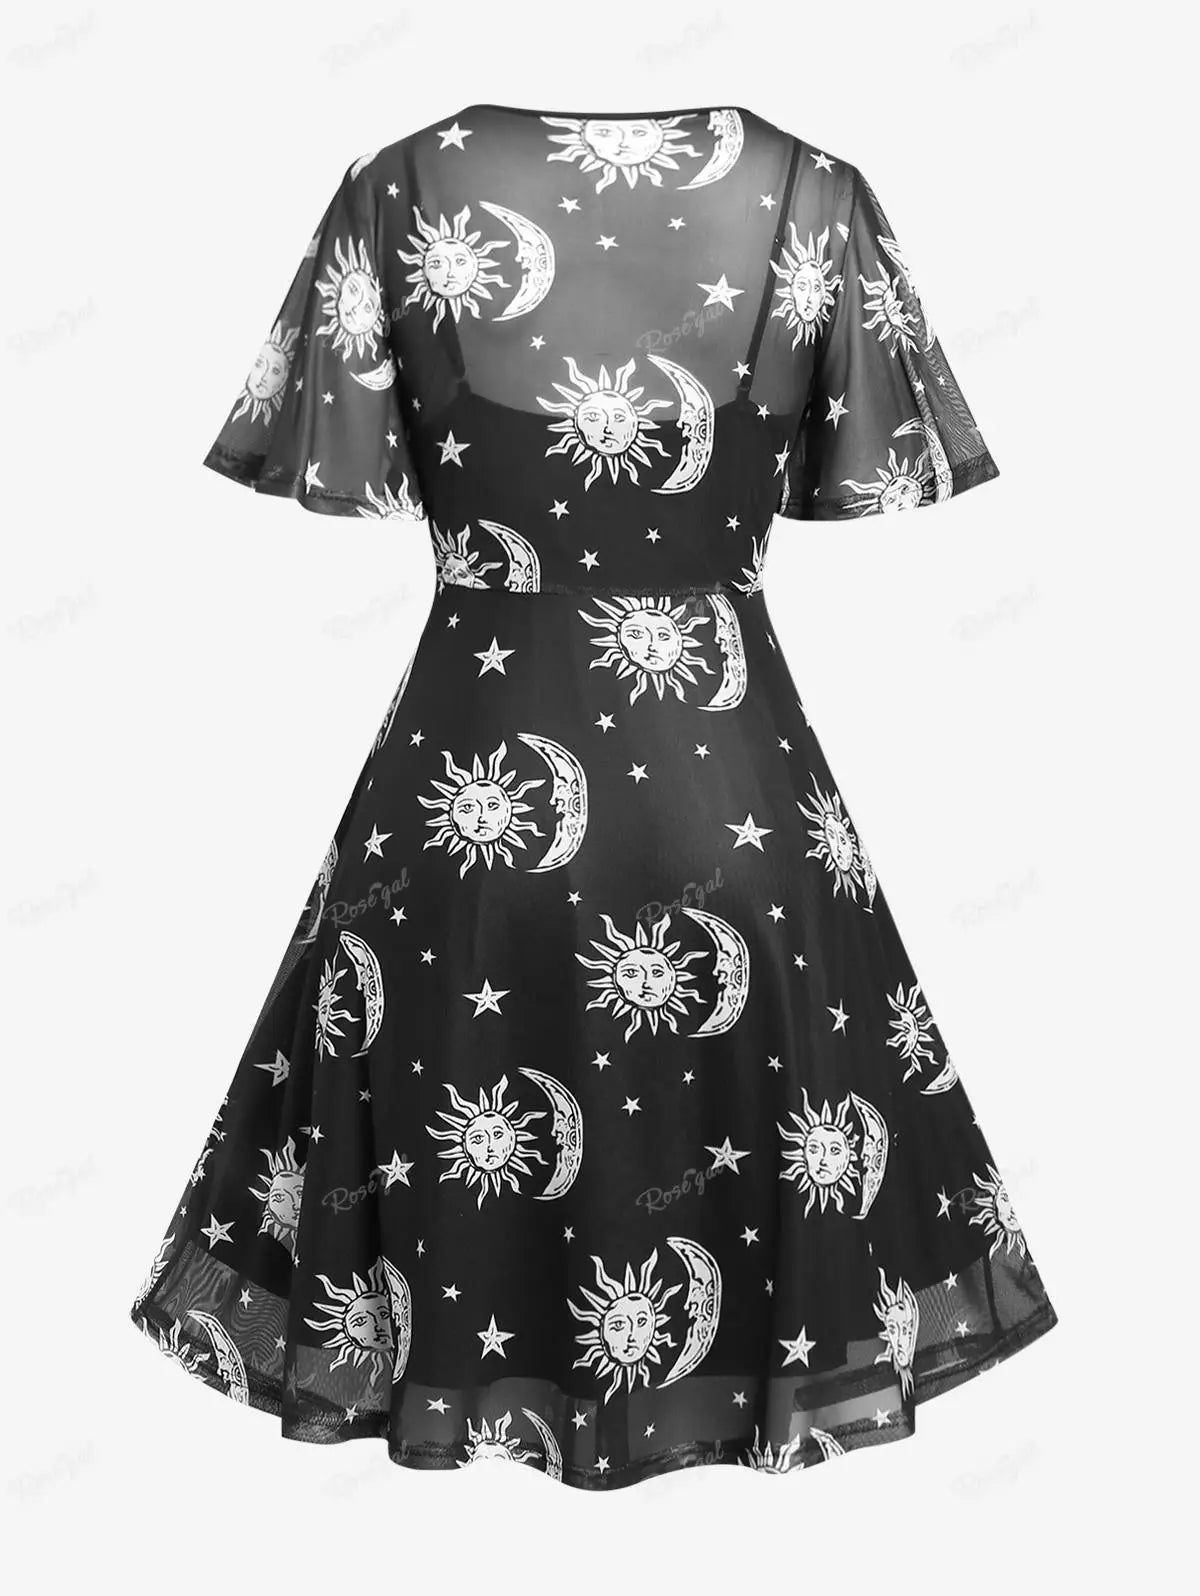 ROSEGAL Plus Size Sun Moon Star Printed Lace-up Mesh Dress And Lace Trim Cami Dress Set 2023 Fashion High Waist Vestidos Dresses